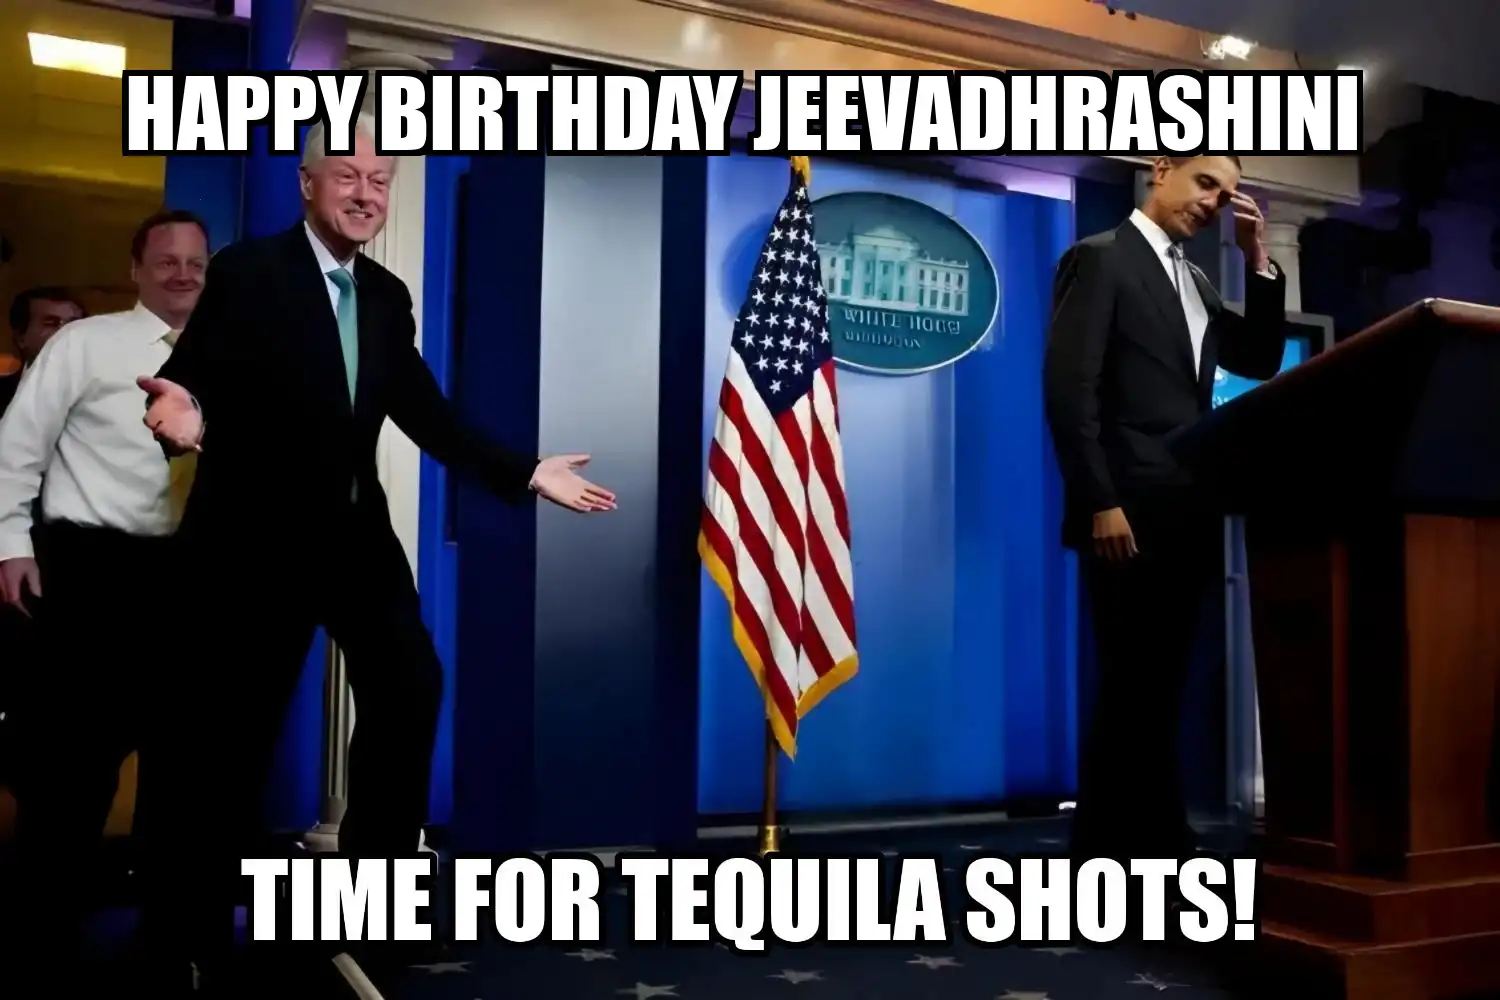 Happy Birthday Jeevadhrashini Time For Tequila Shots Memes